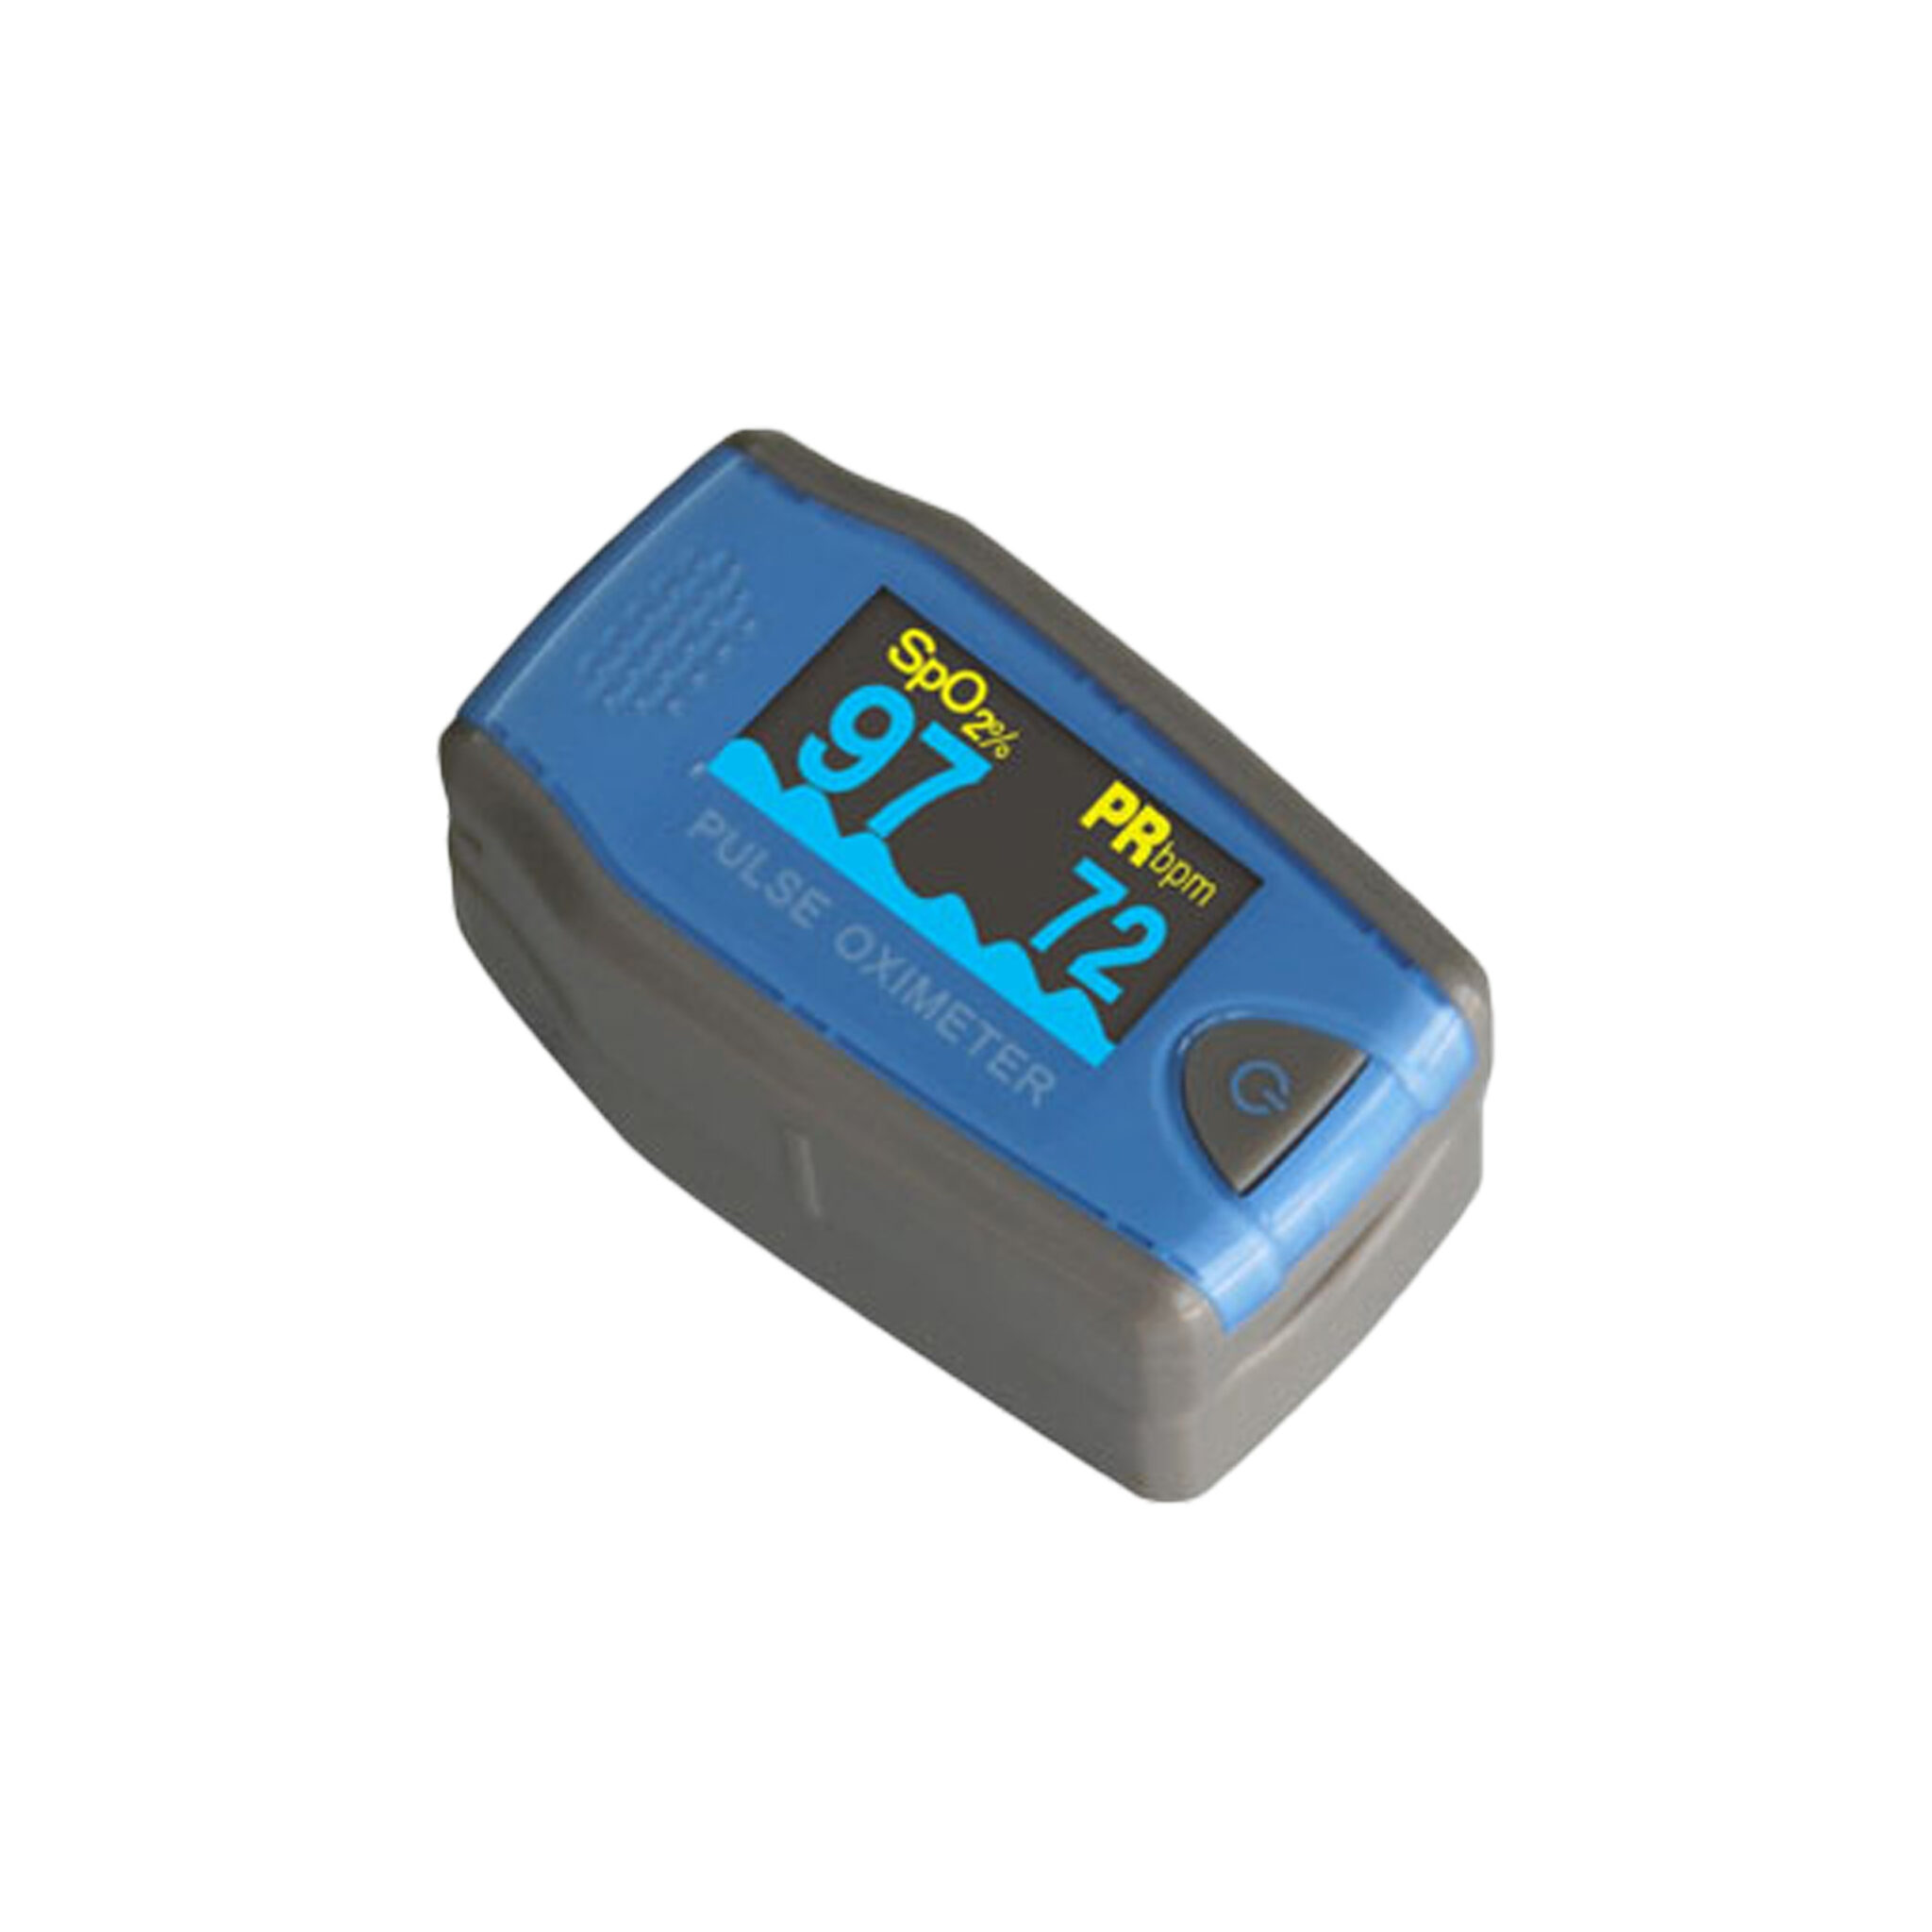 Digital Thermometer - MedSource Labs